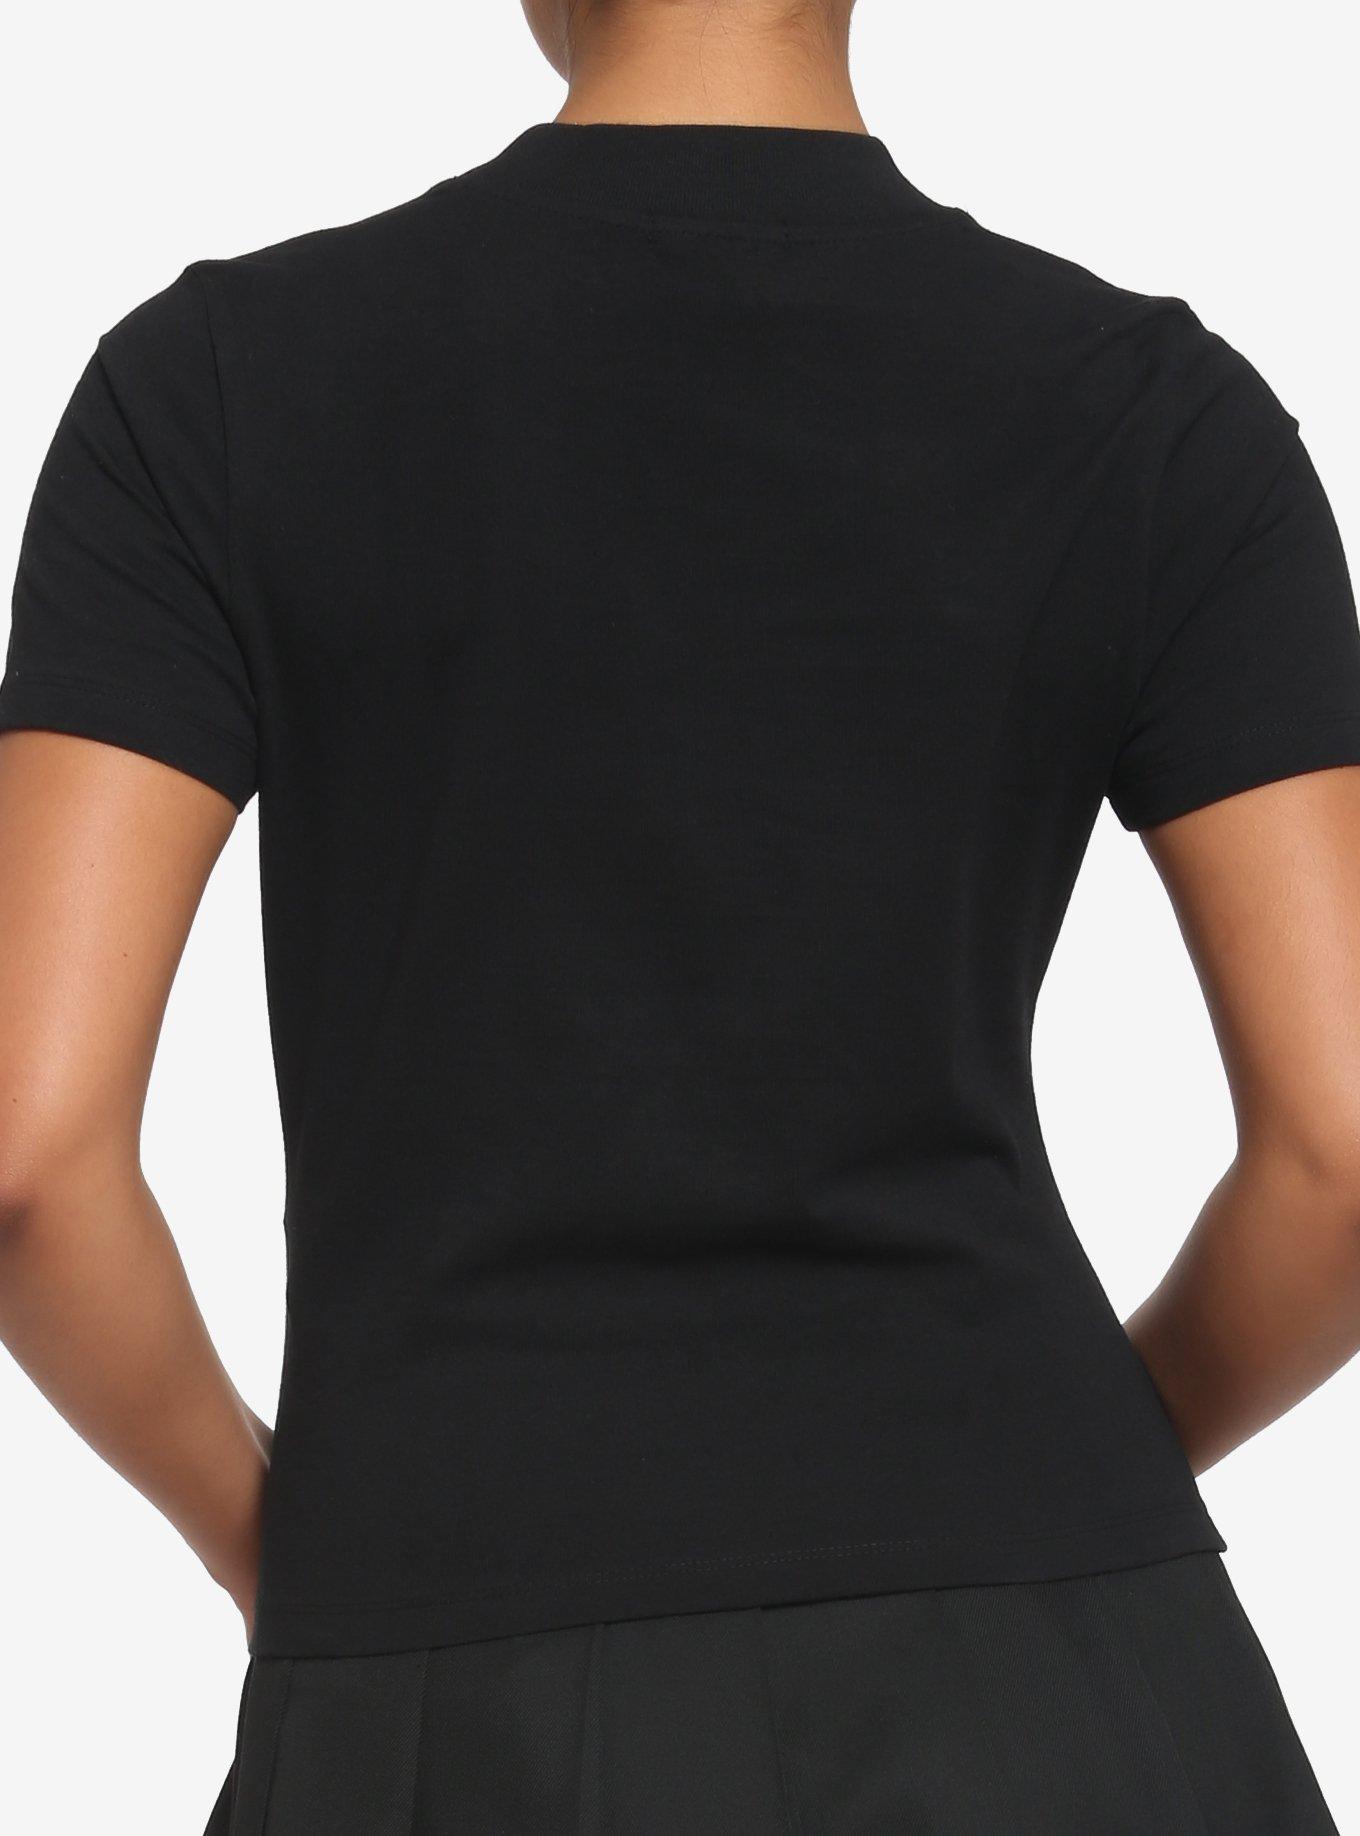 Black Cut-Out Safety Pin Girls T-Shirt, BLACK, alternate